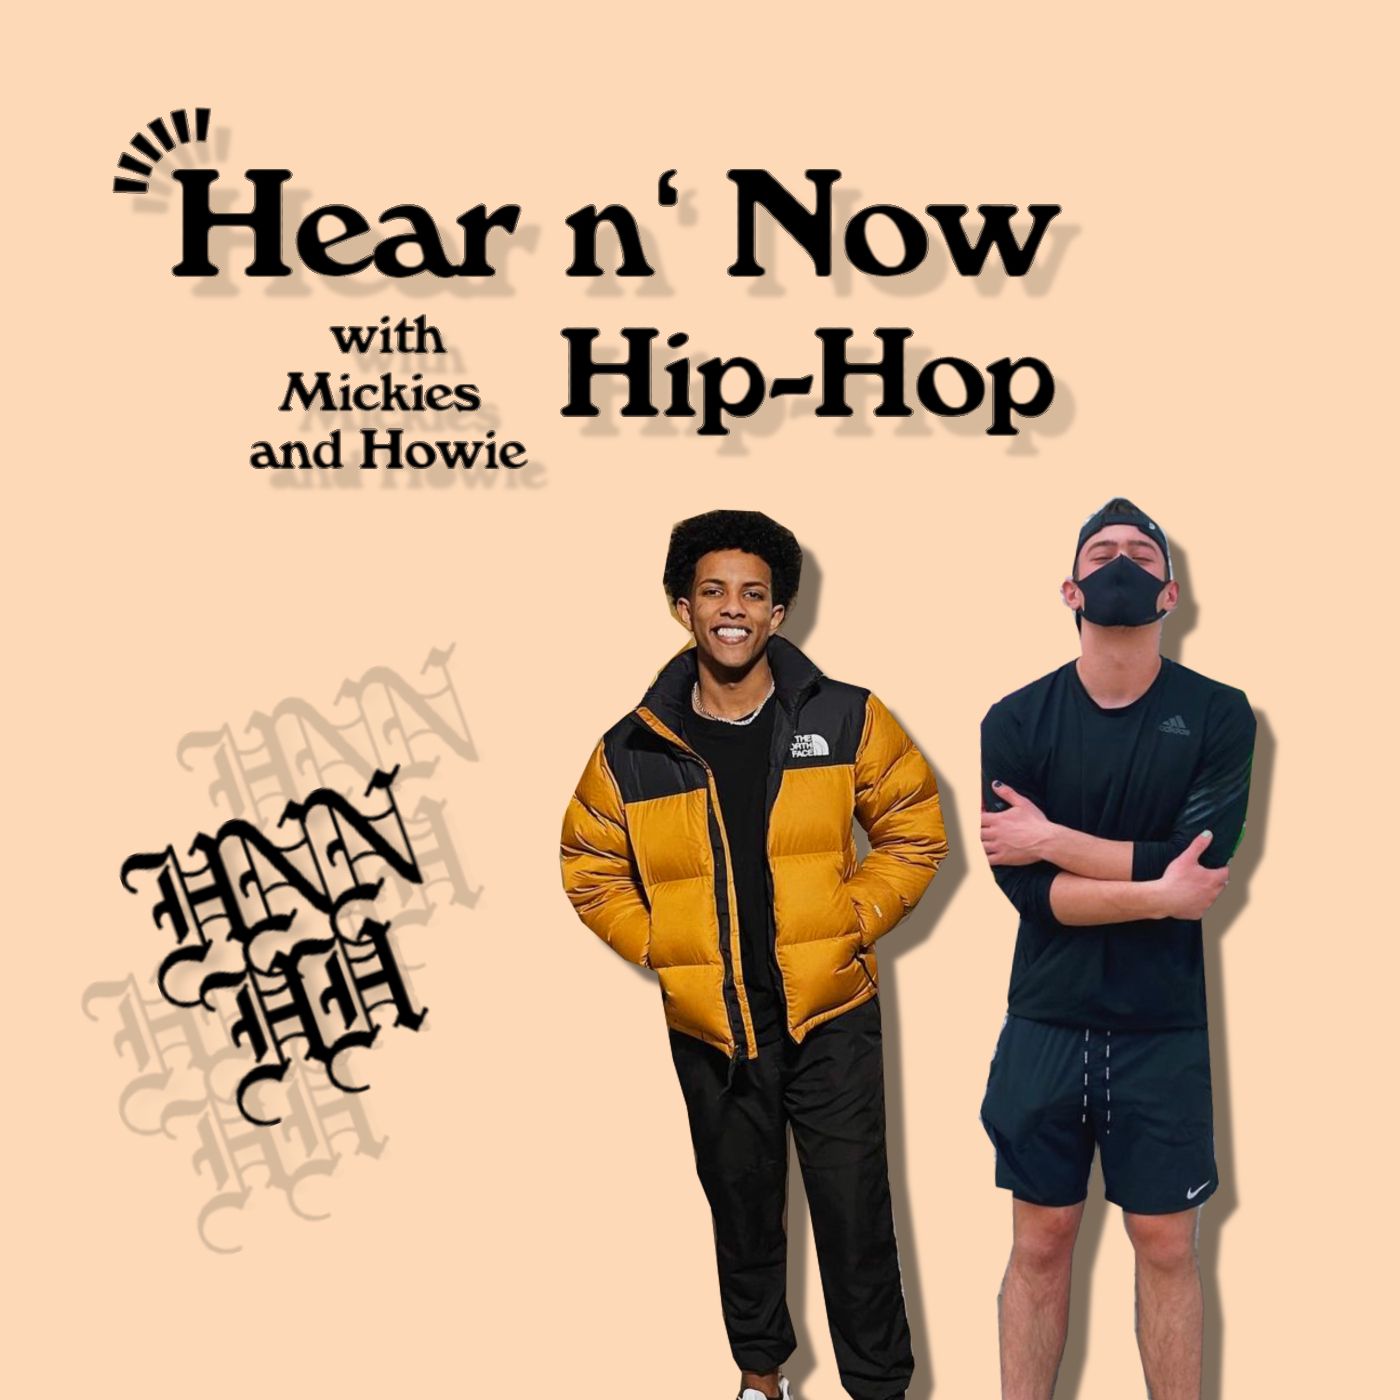 Hear n' Now Hip-Hop